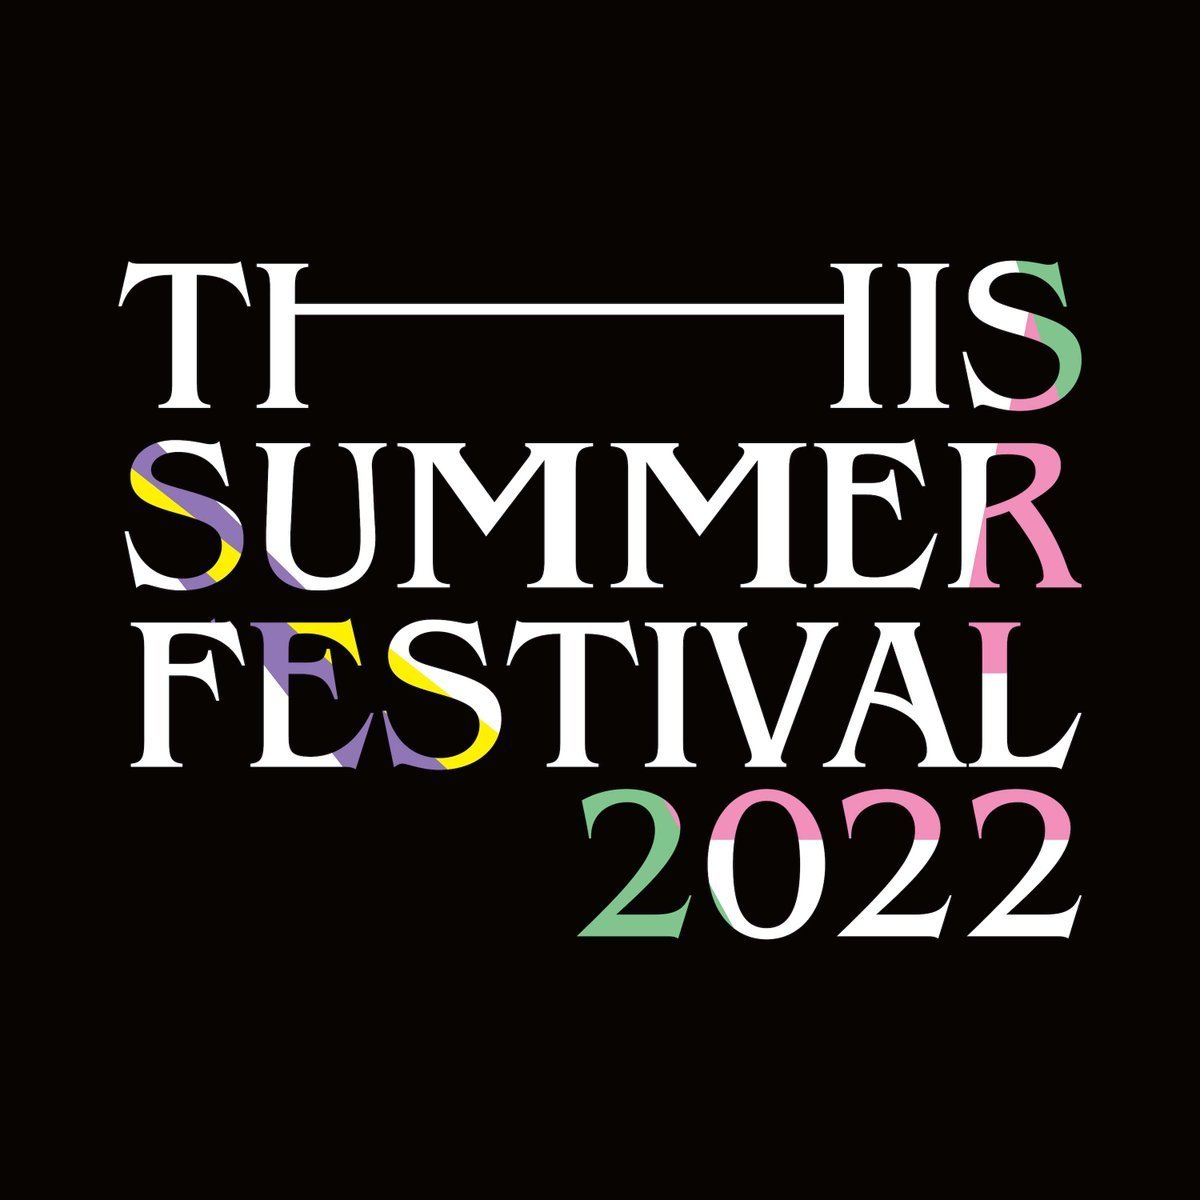 THIS SUMMER FESTIVAL 2022 (Live at 東京国際フォーラム ホールA 2022.4.28)